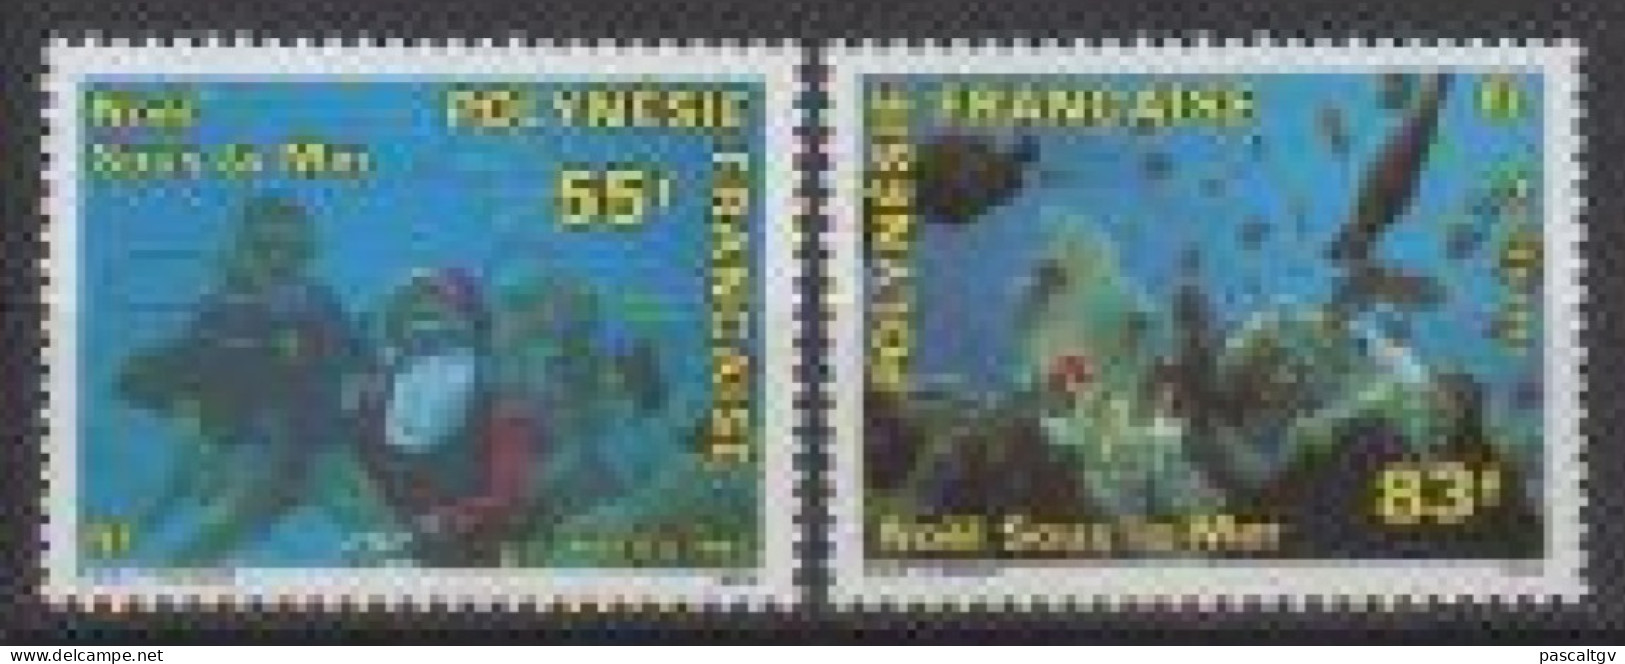 Polynésie Française - 1991 - N° 396/397 ** - - Ongebruikt